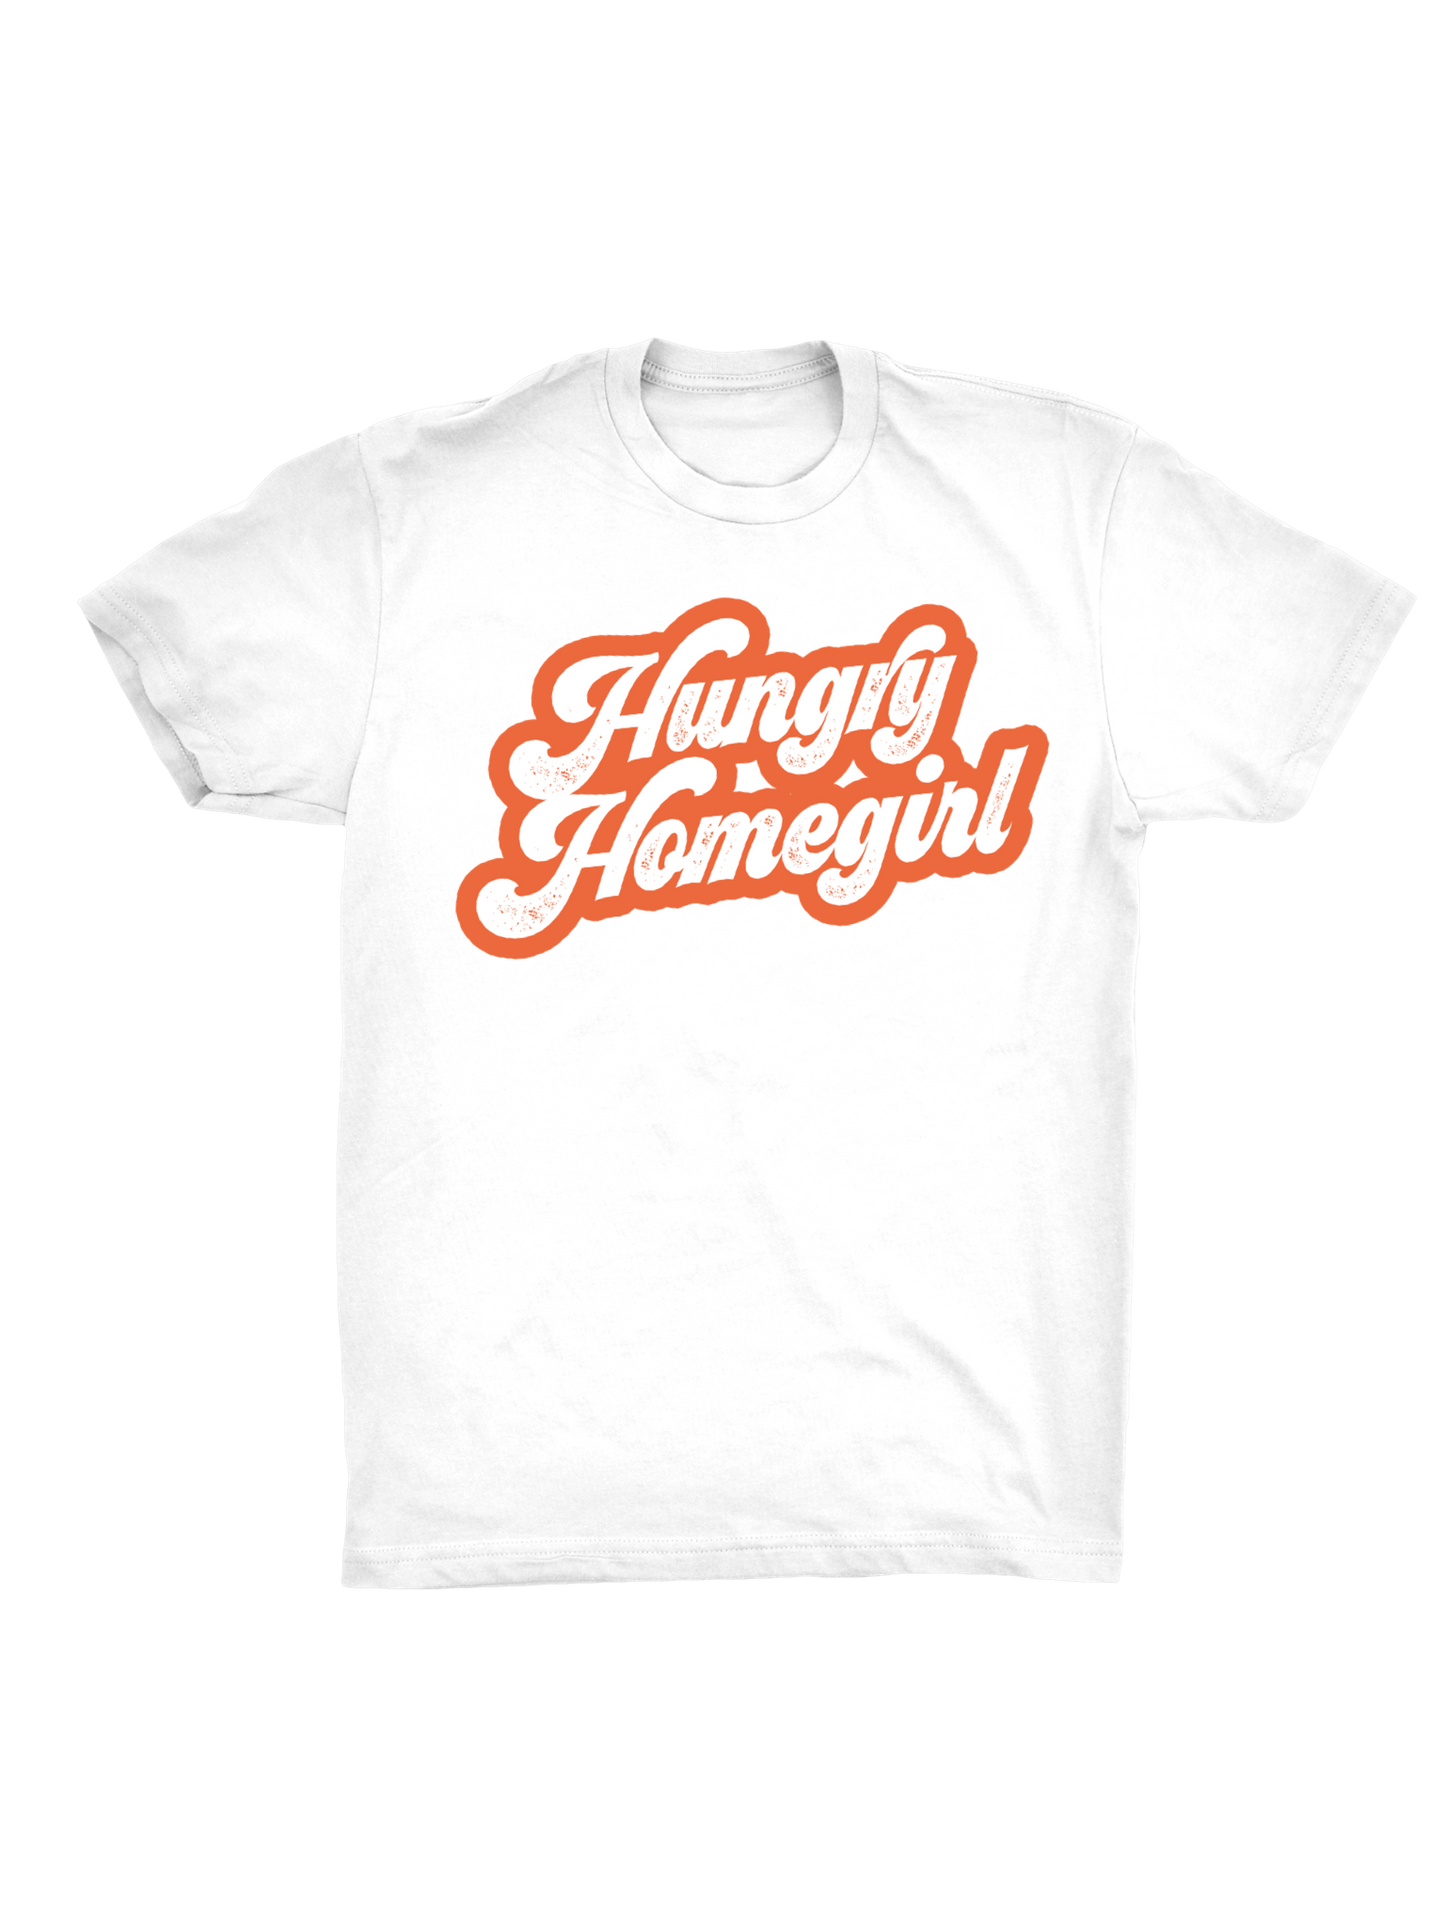 Classic Homegirl T-Shirt - Orange